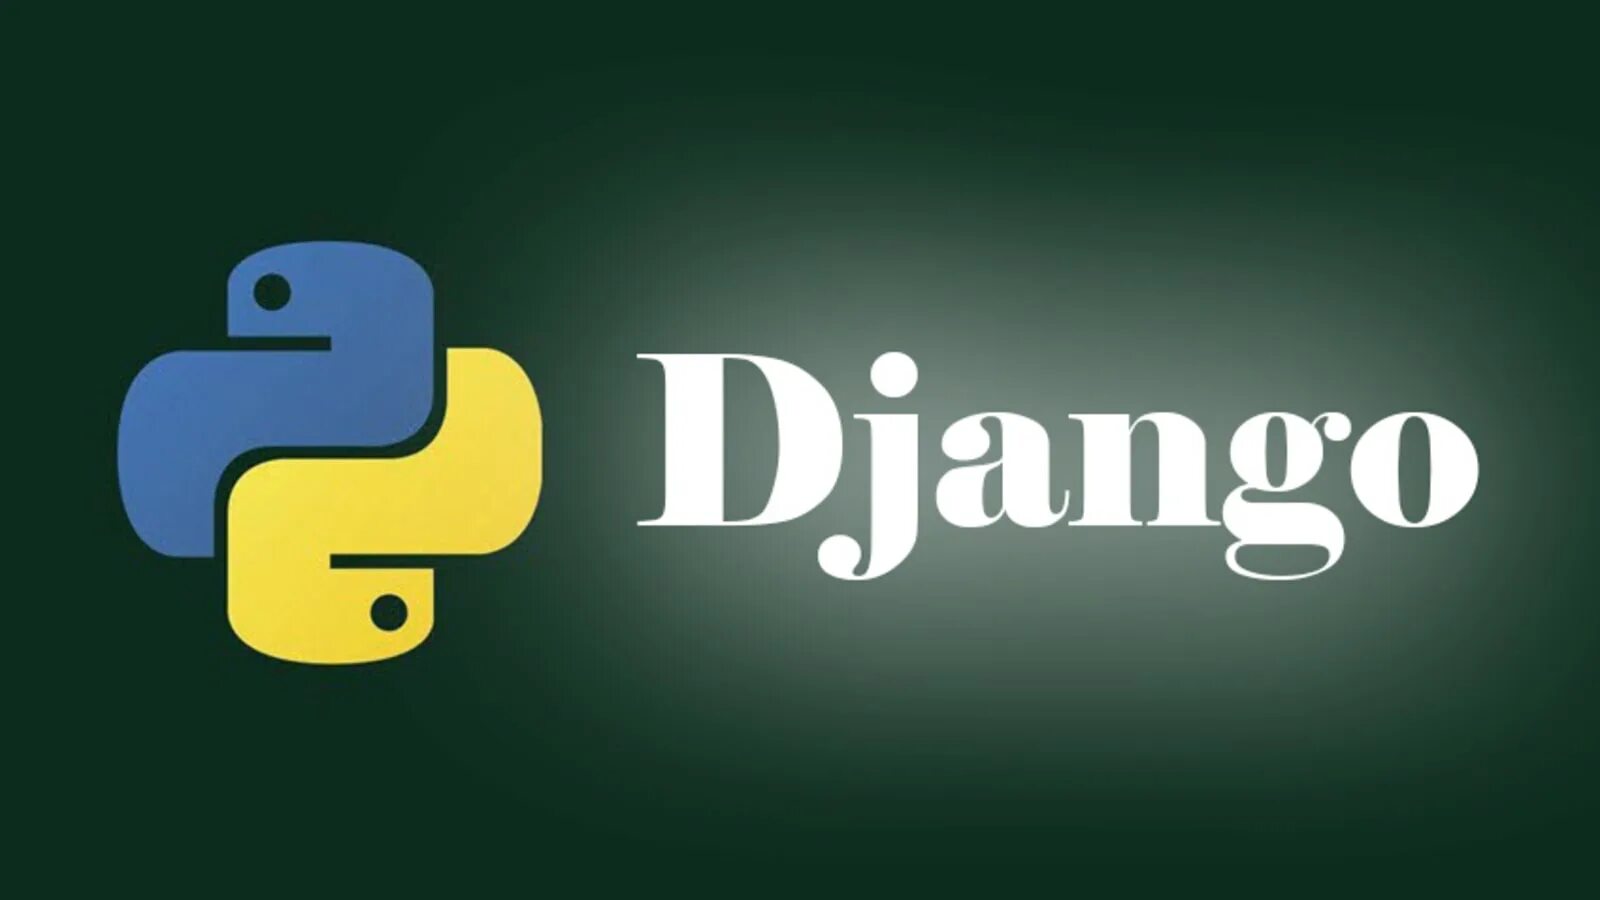 Значок Django. Django Python. Django фреймворк. Python-фреймворк Django. Django python site